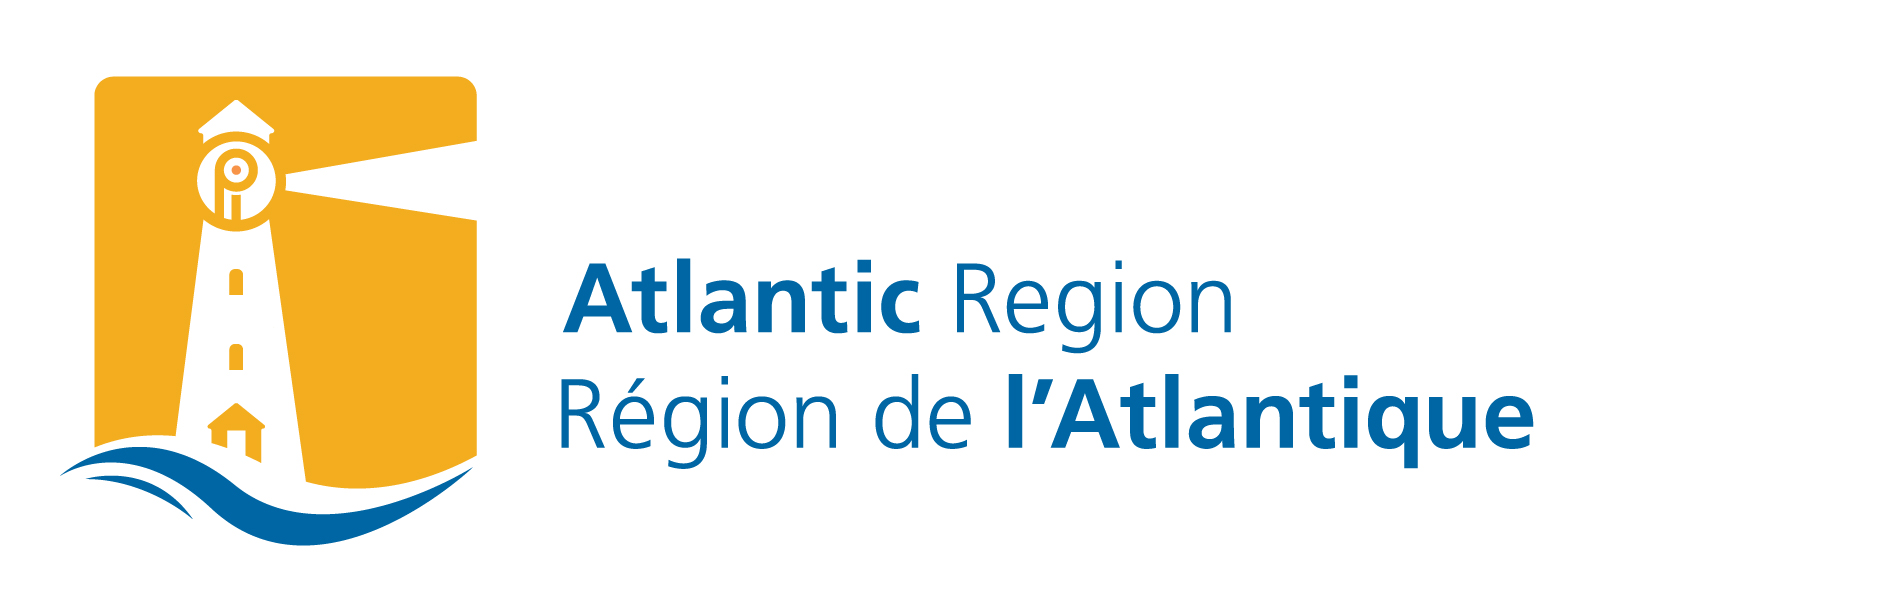 Atlantic Region Logo